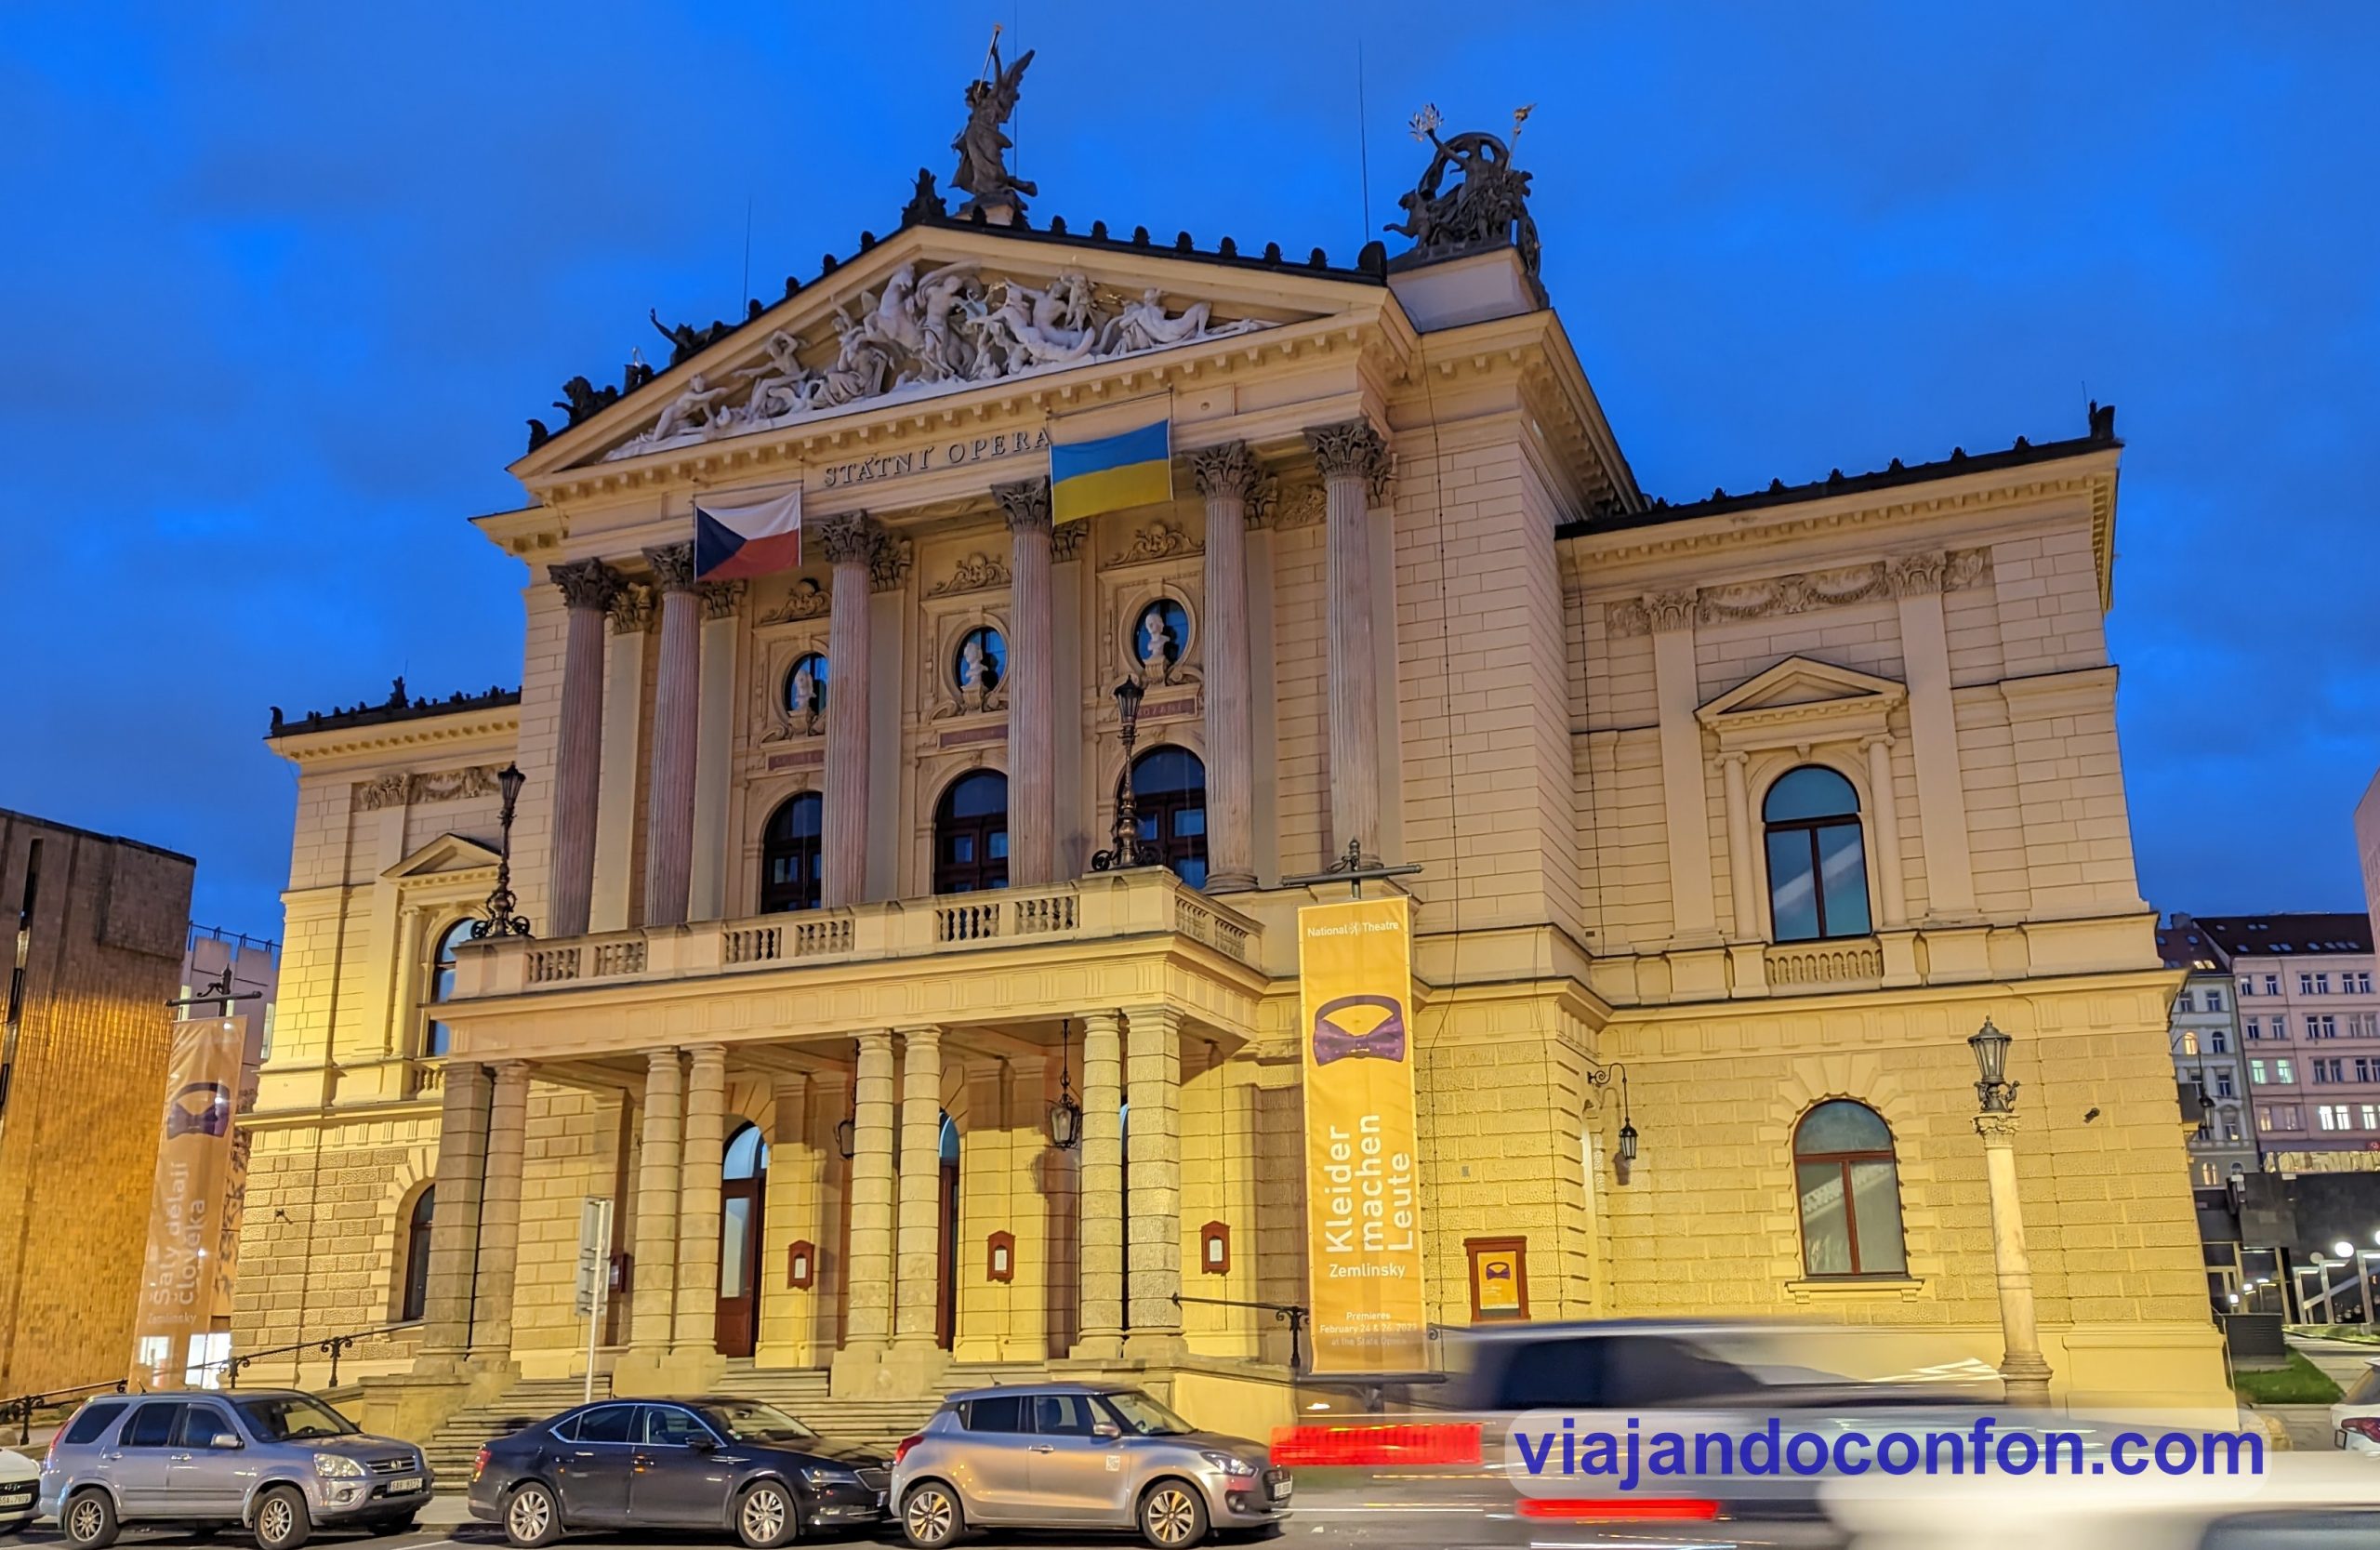 Státní opera, la Ópera Estatal de Praga
Praga